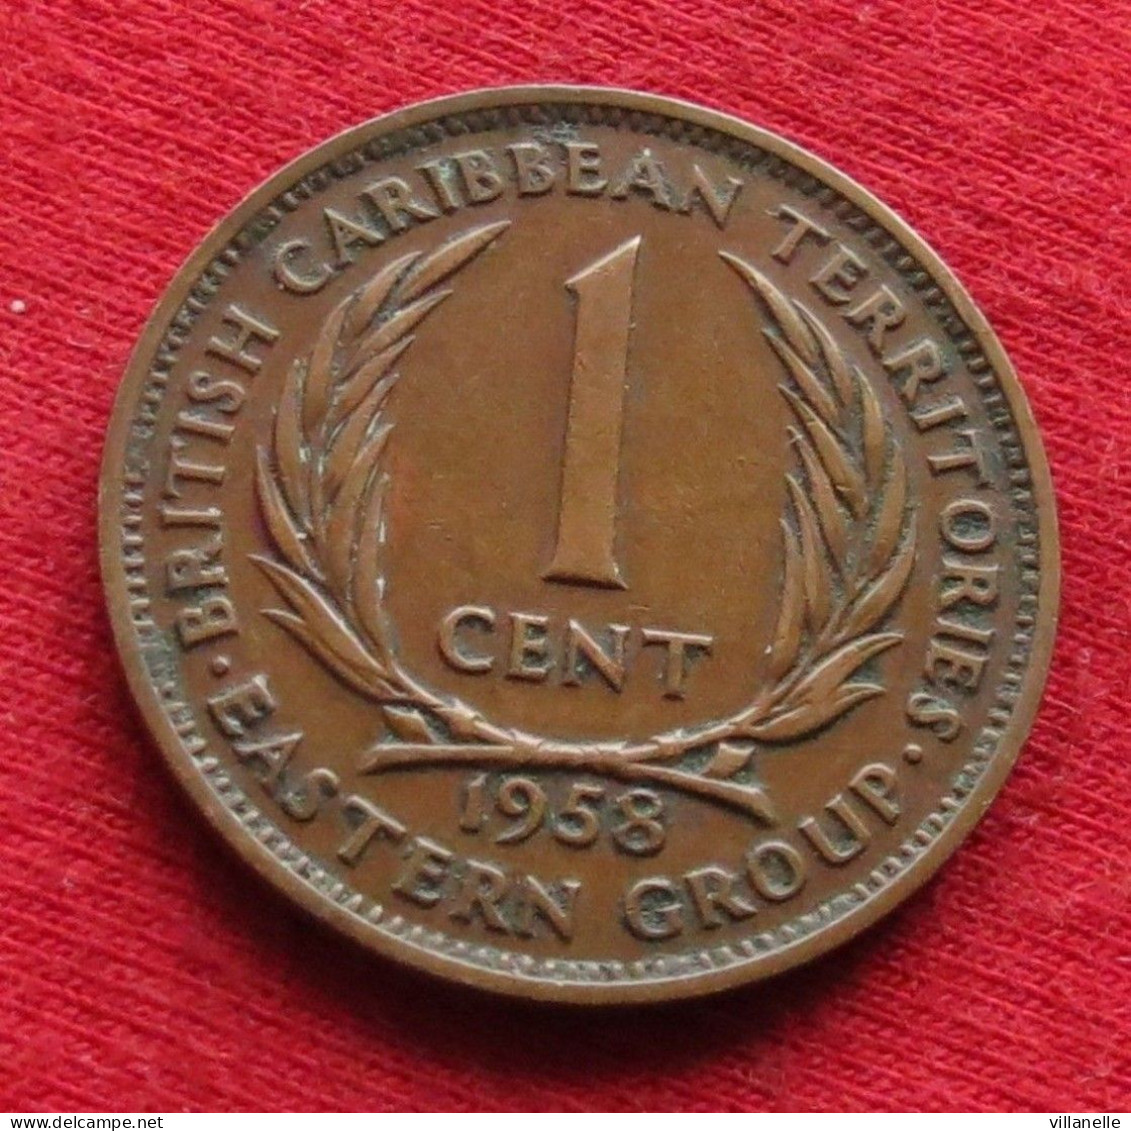 East Caribbean States 1 Cent 1958 KM# 2 *VT British Caribbean Territories Caraibas Caraibes Orientales - Caribe Británica (Territorios Del)